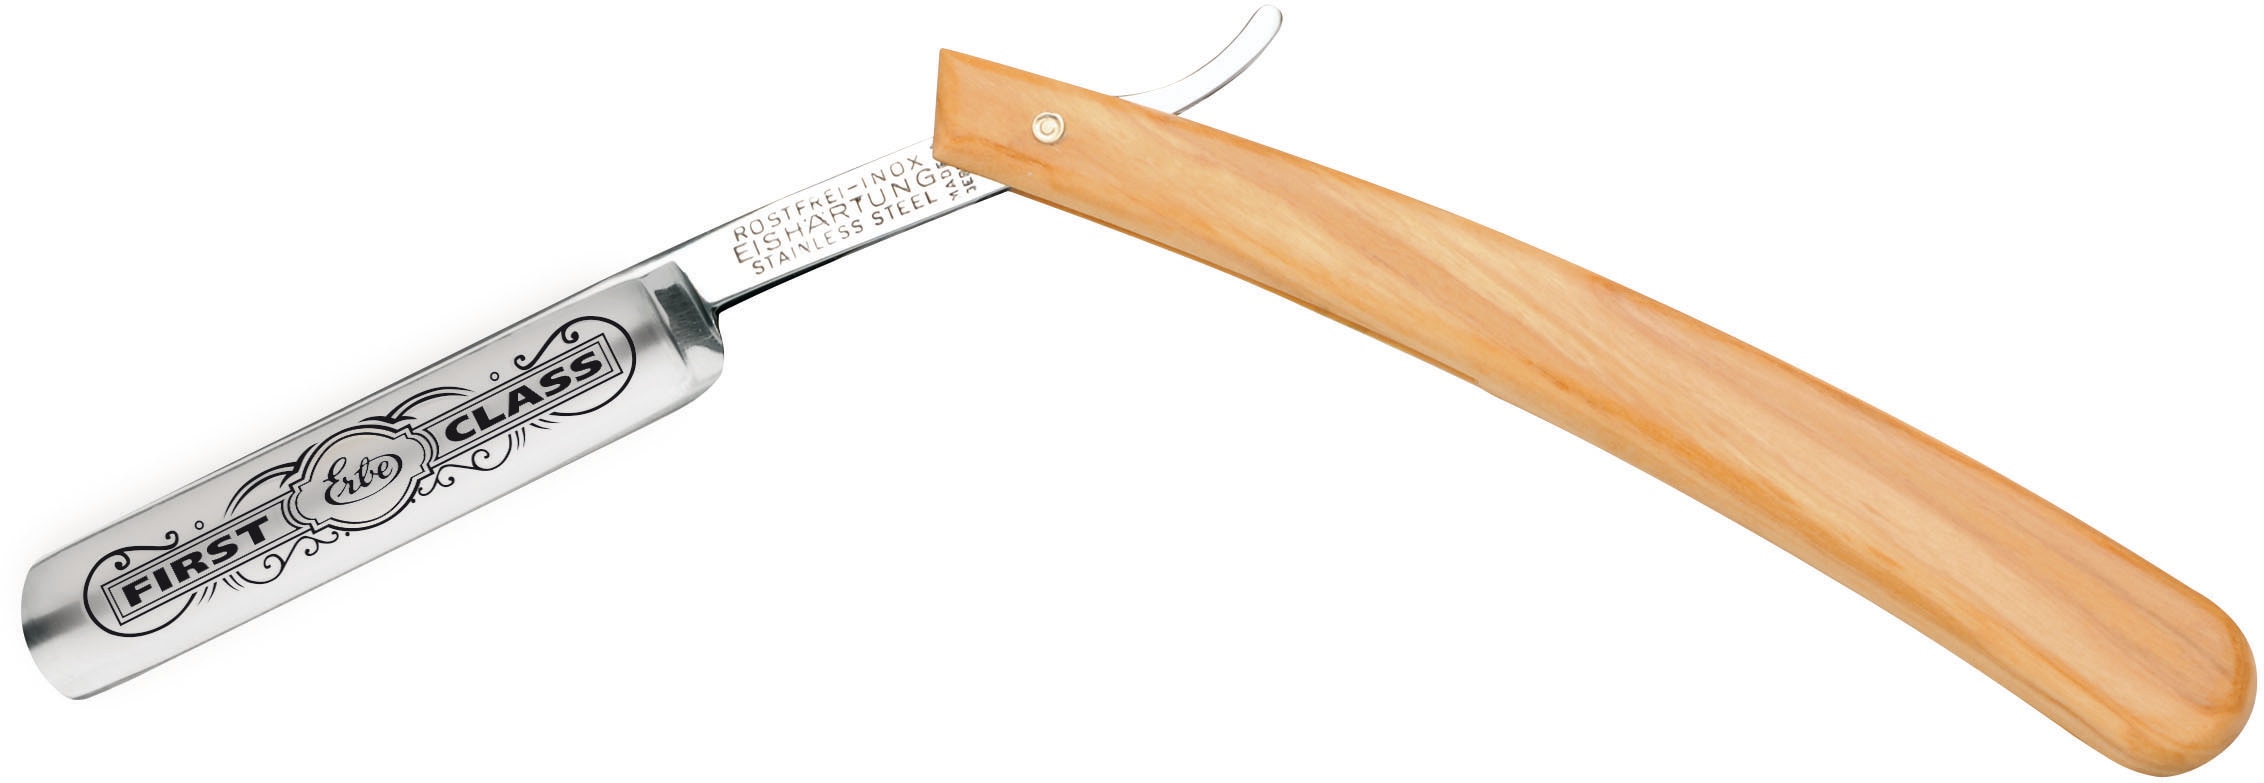 ERBE Rasiermesser »Qualitäts-Rasiermesser mit Olivenholz-Griff« auf Raten |  BAUR | Rasiermesser